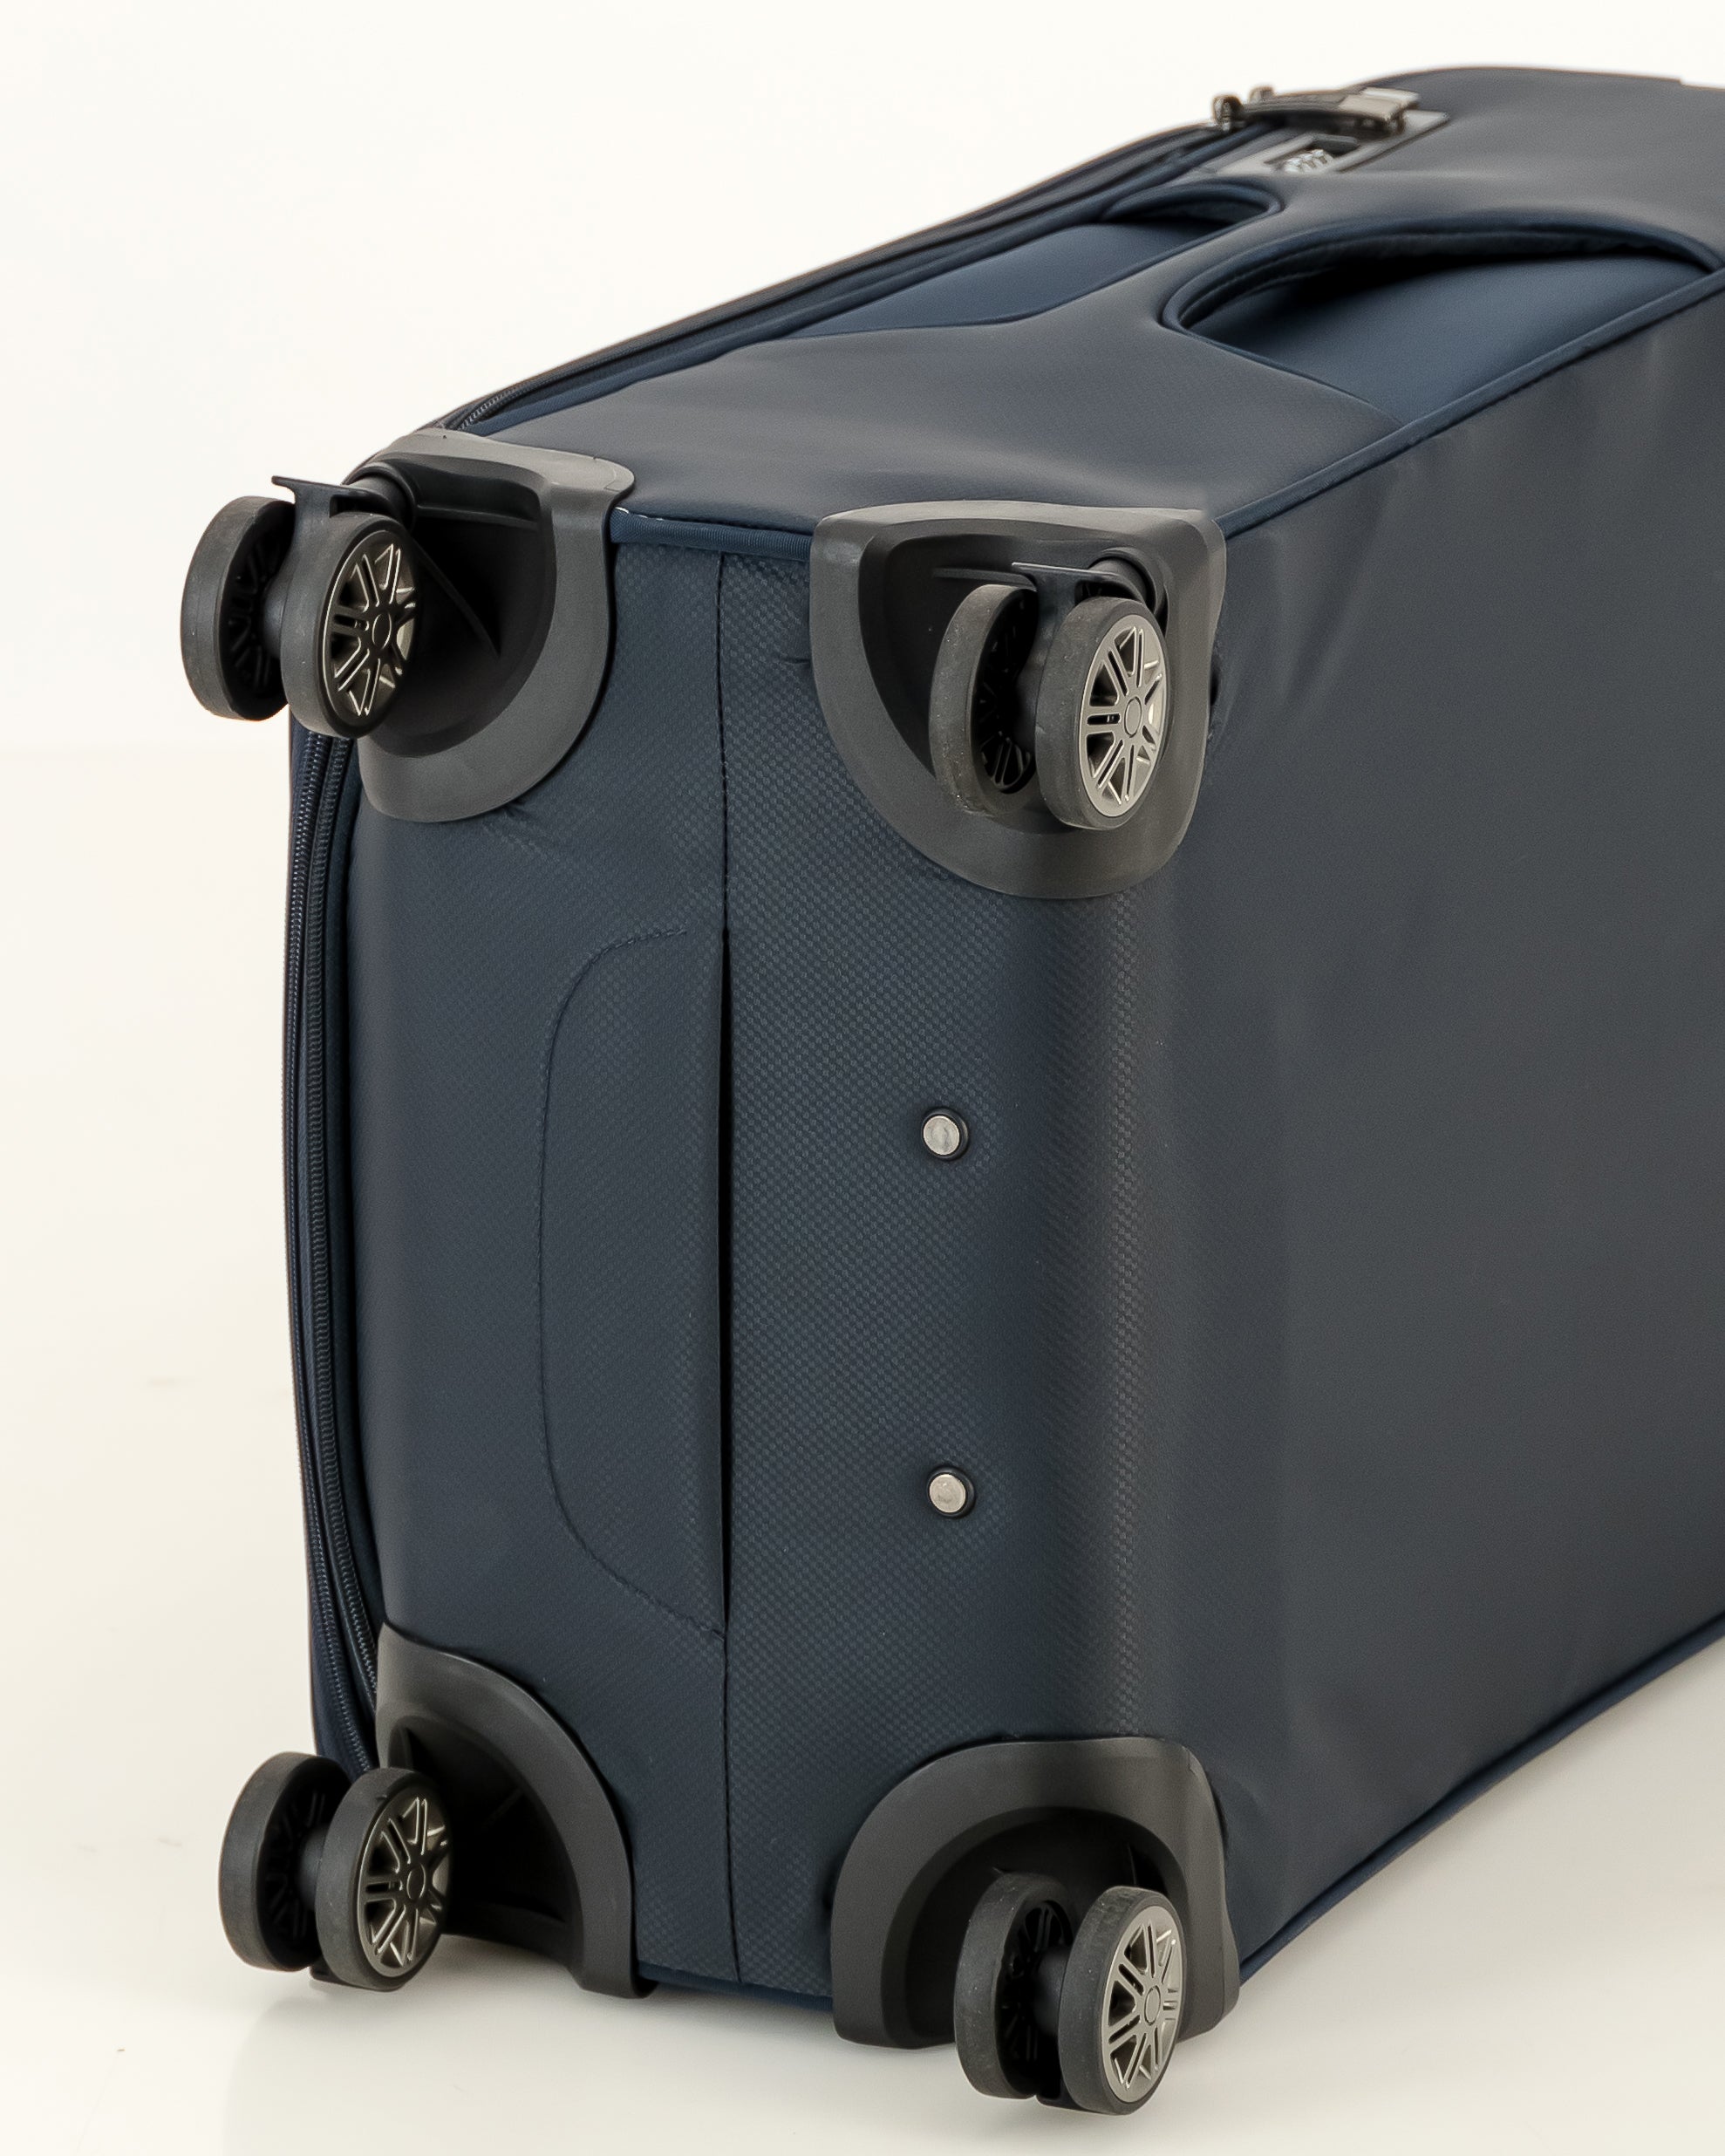 So-Fly X-Lite Medium 4 Wheel Spinner Suitcase